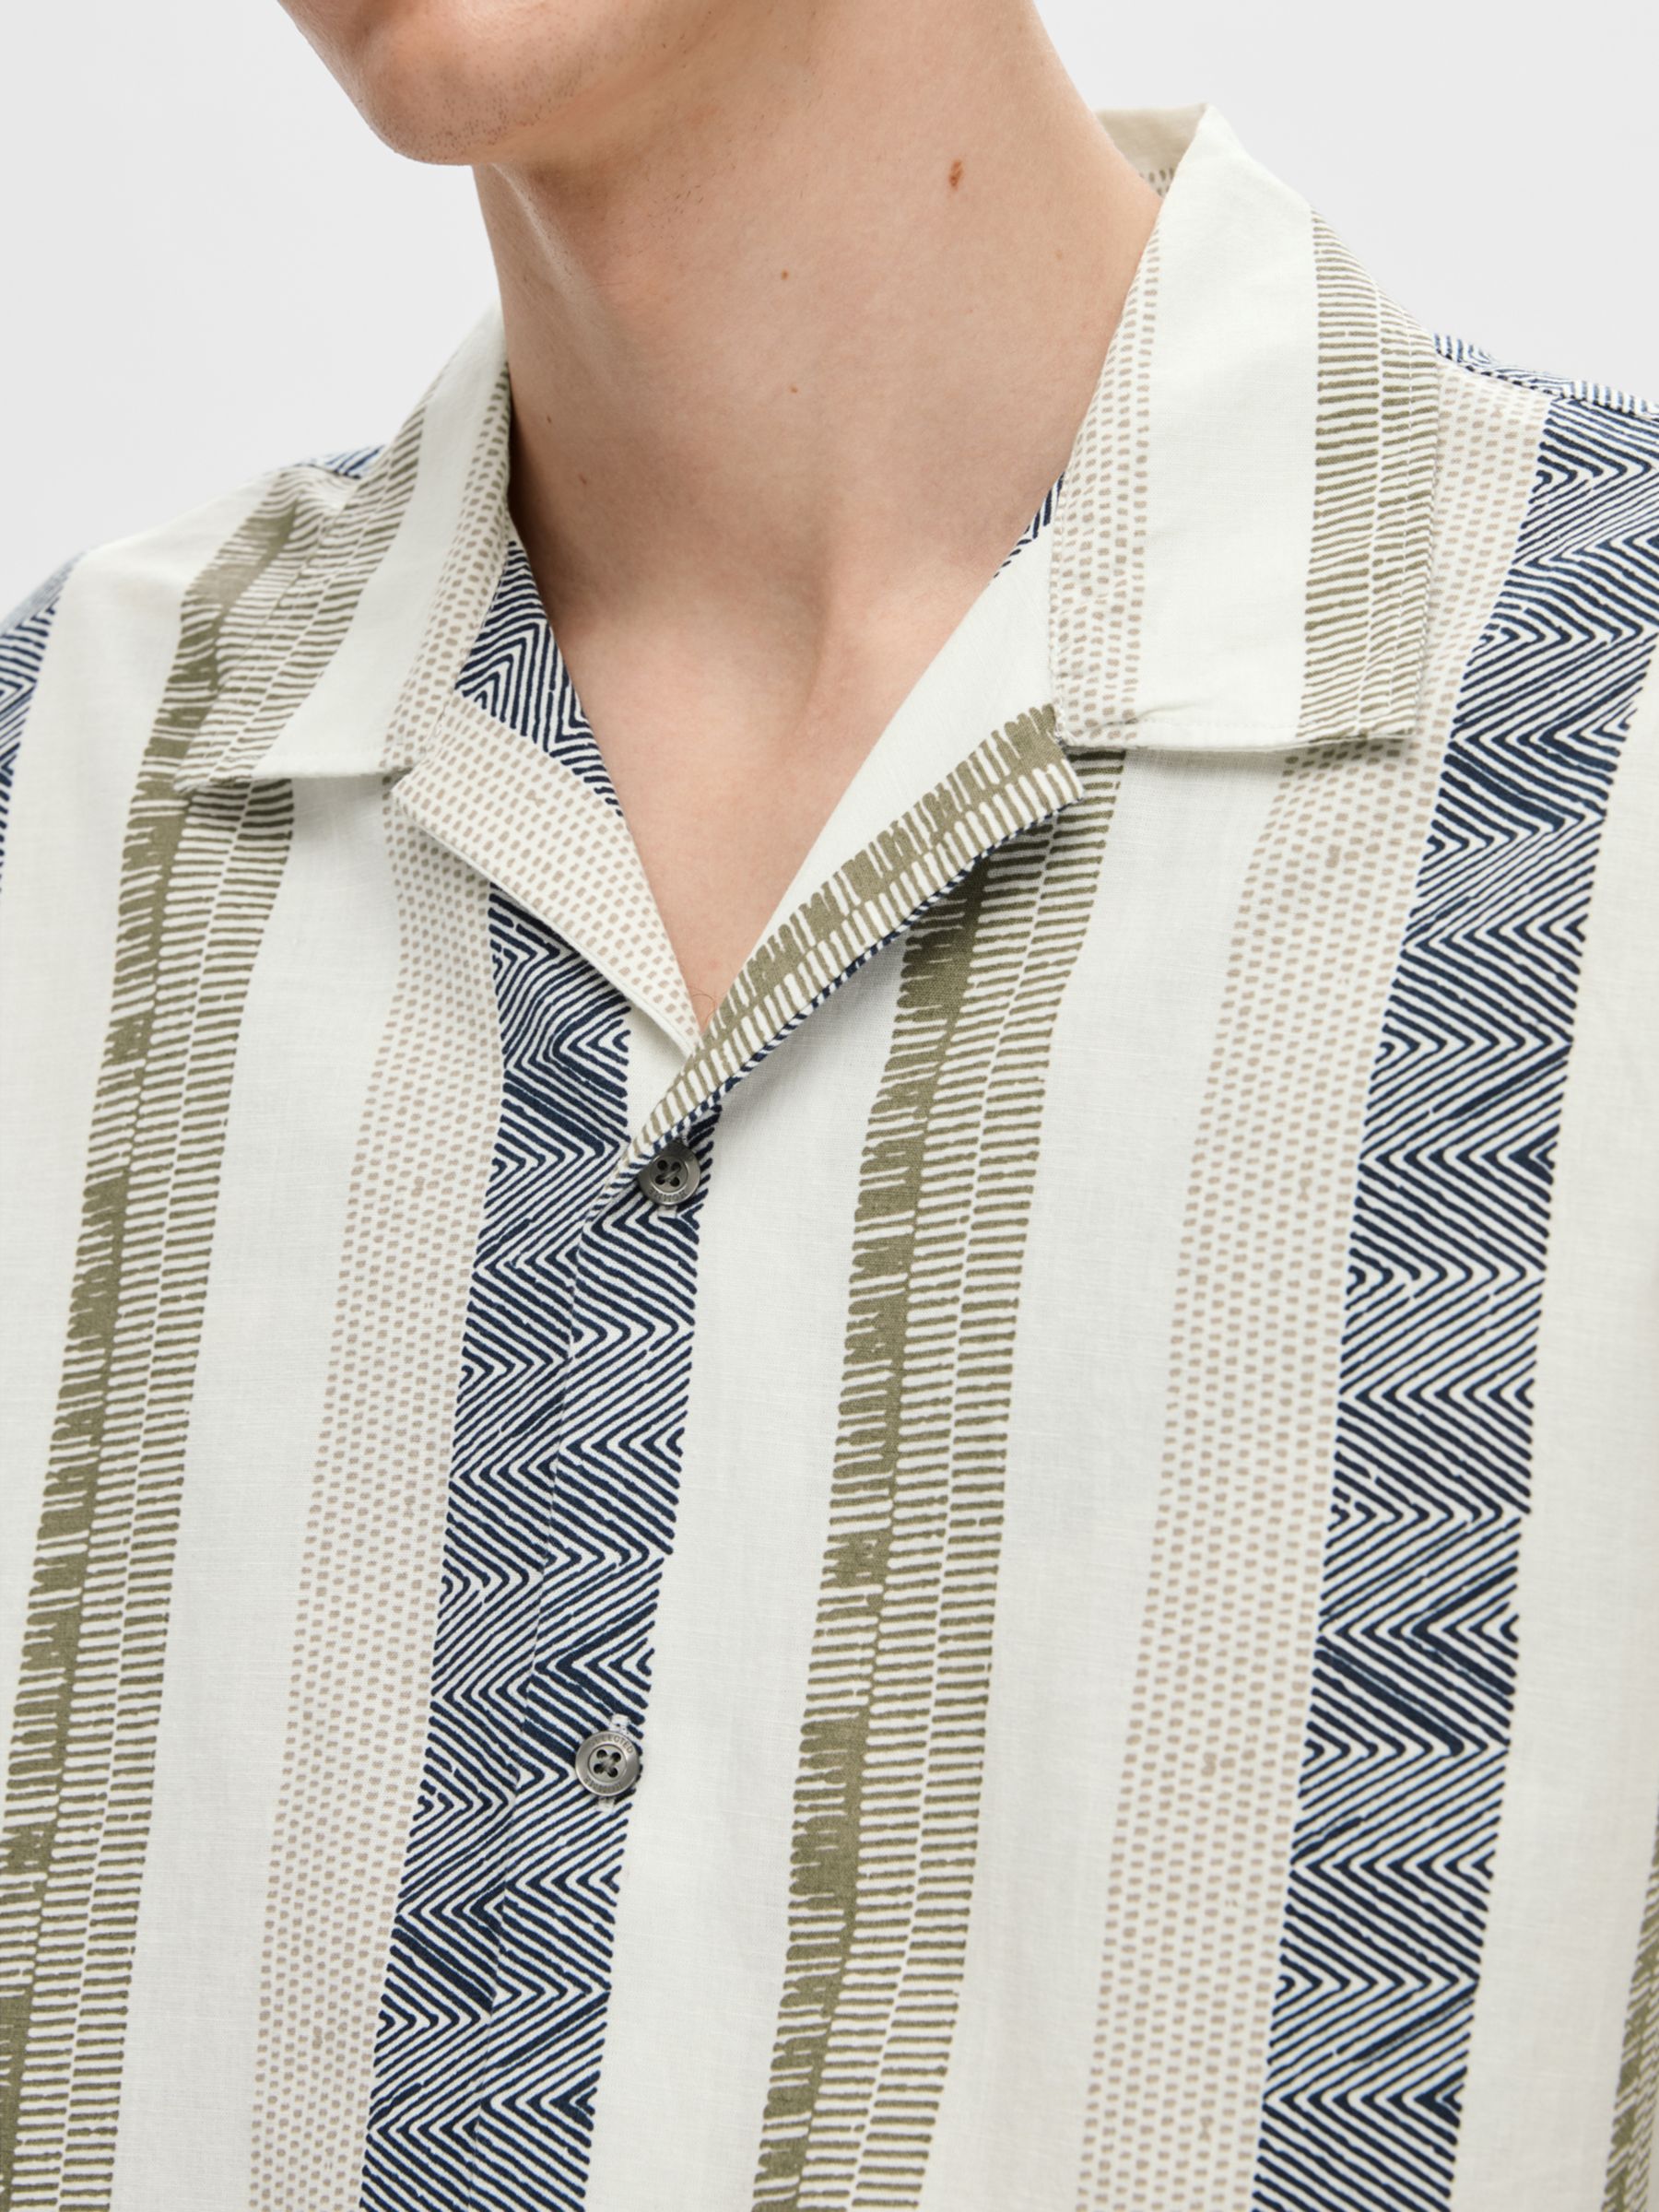 SELECTED HOMME Stripe Linen Cotton Blend Shirt, Egret/Multi, S